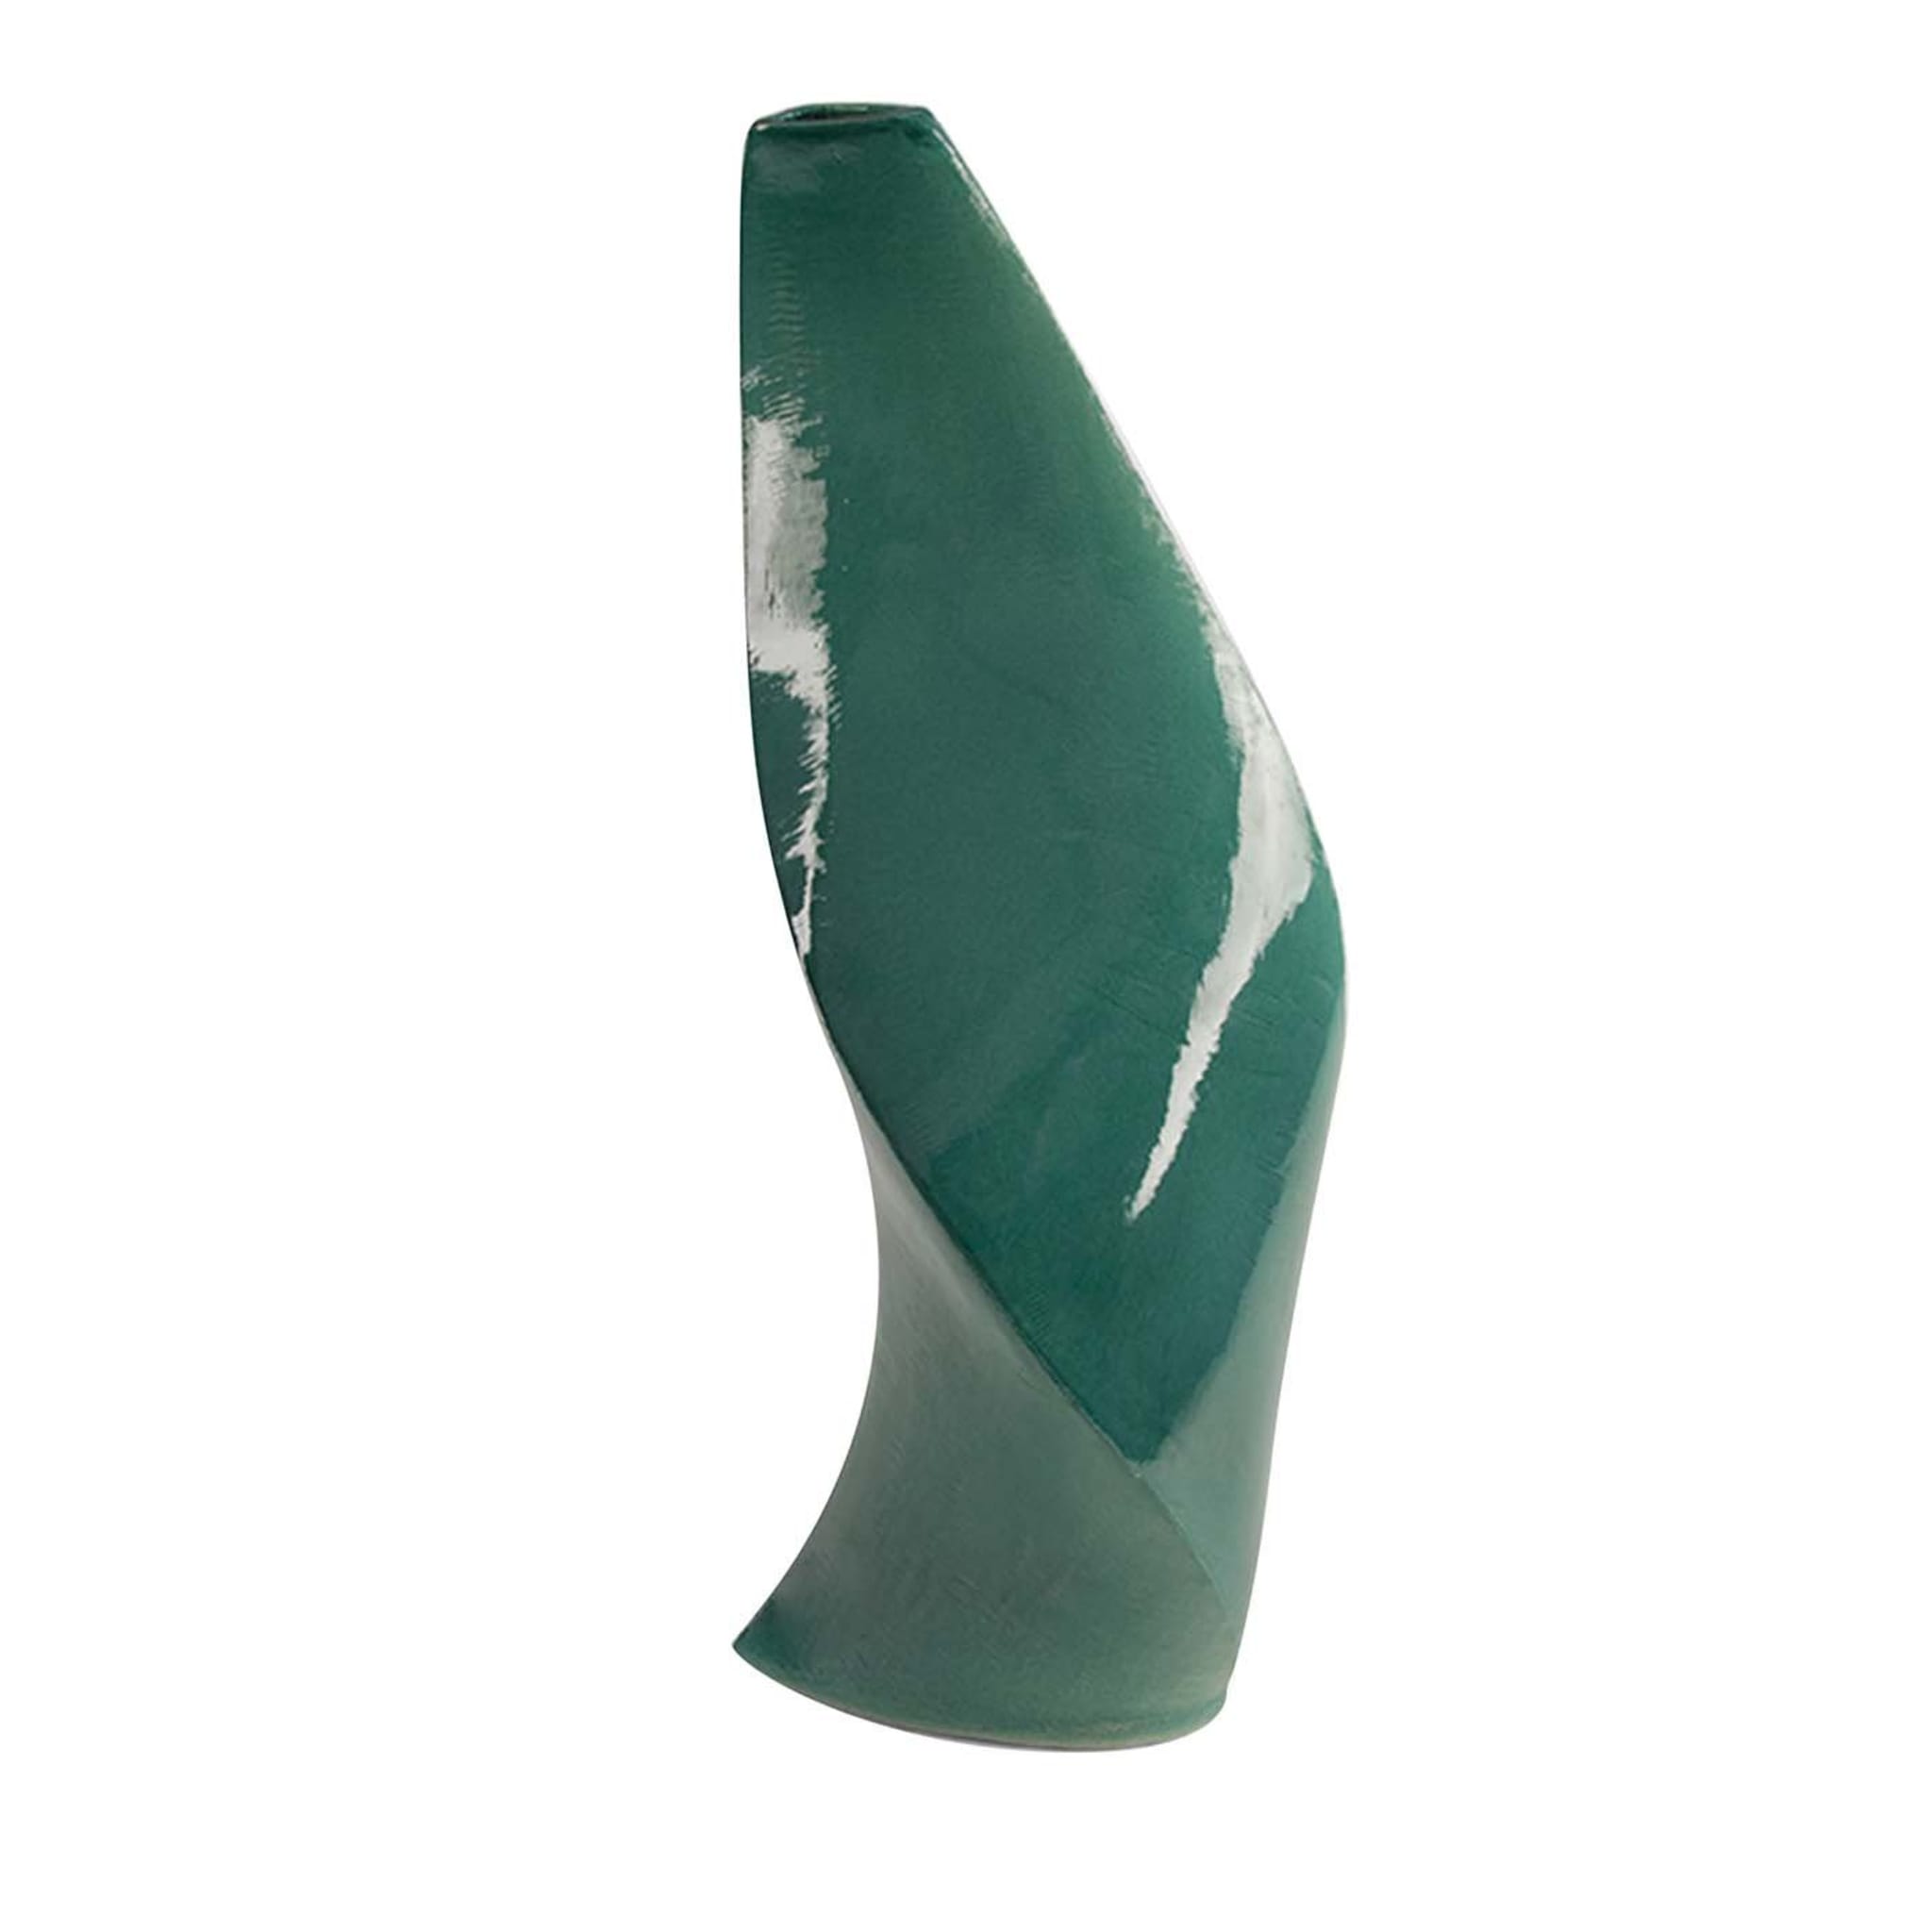 Demeter Green Sculptural Vase #1 - Main view